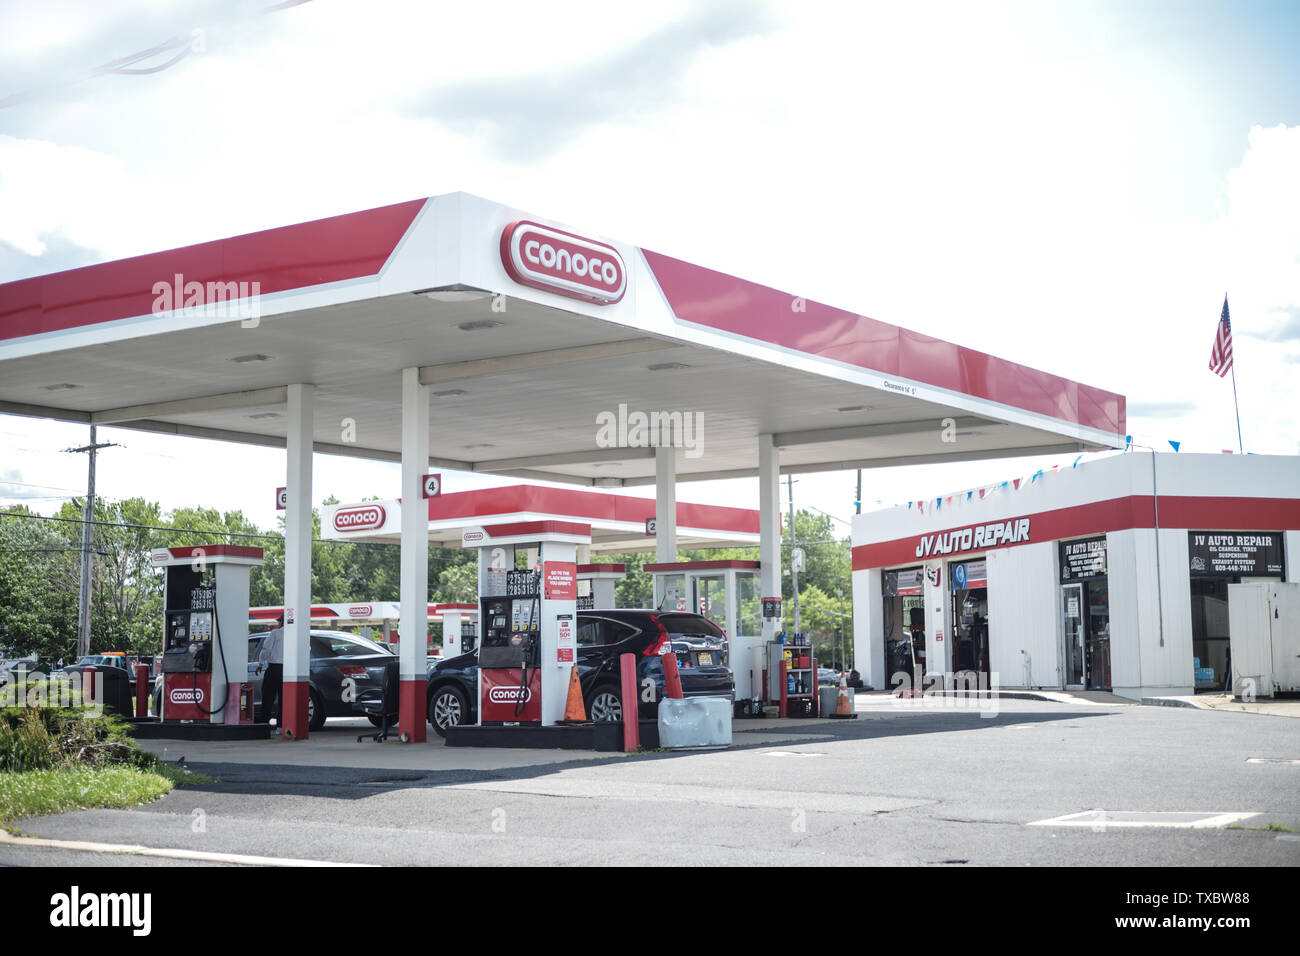 Princeton New Jersey, USA, June 23, 2019:Phillips 66 Conoco gas service station - Image Stock Photo